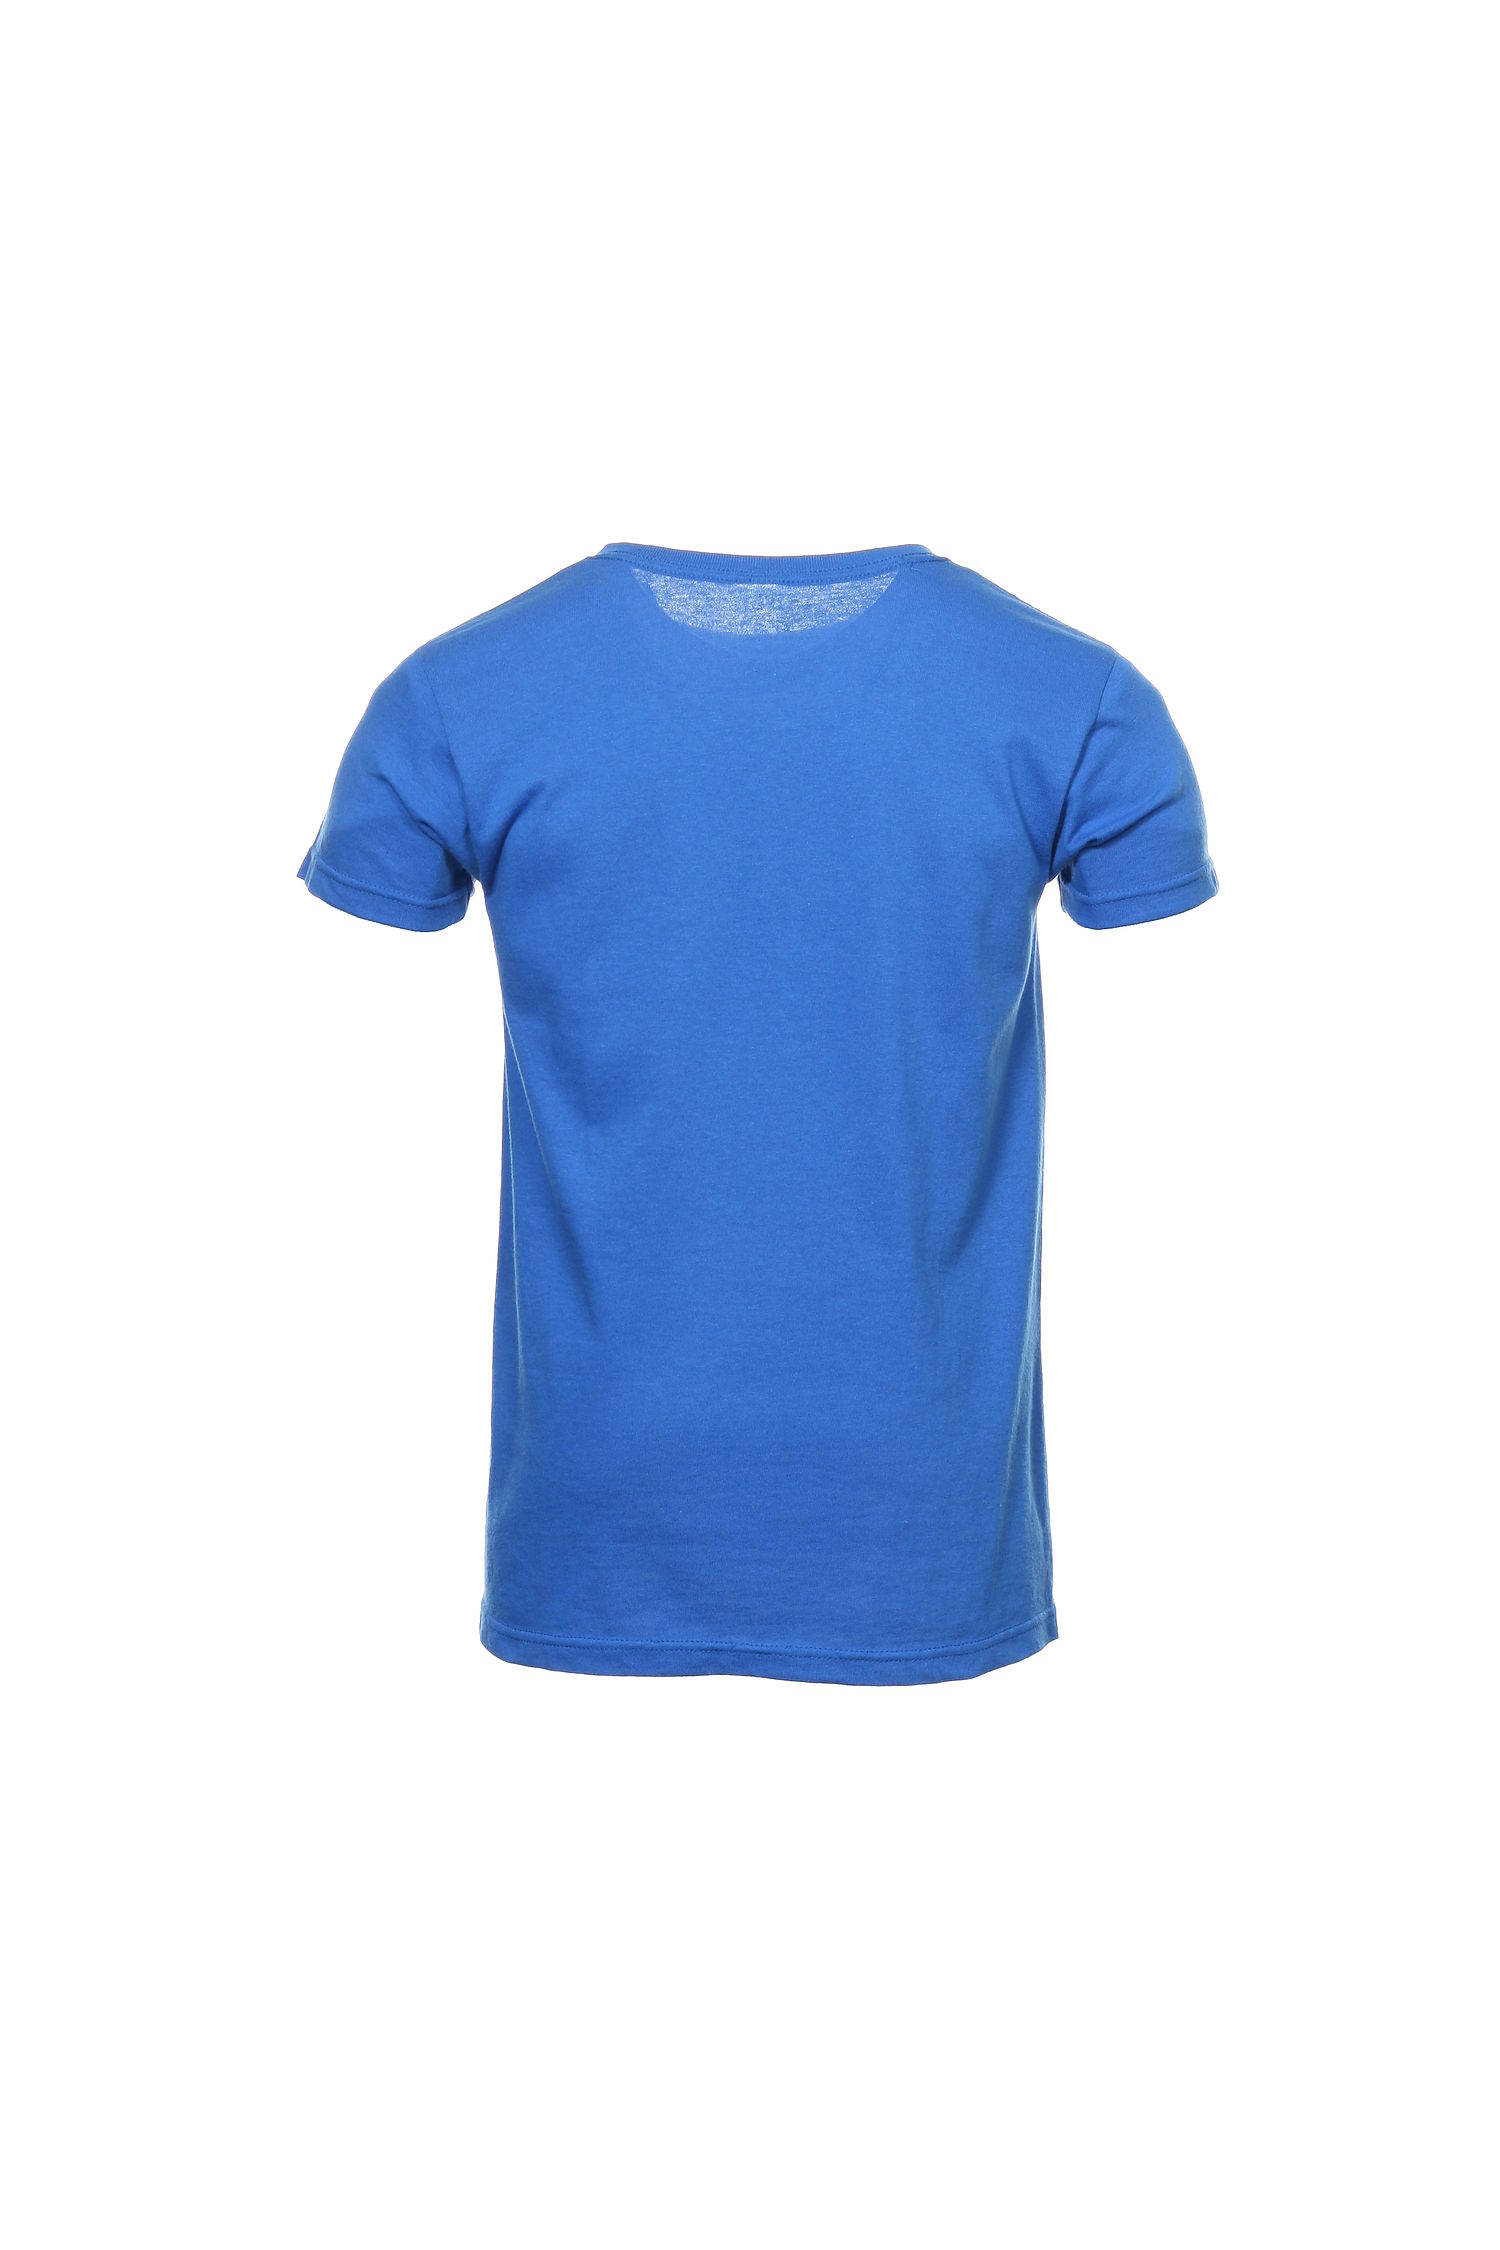 Izod Blue Graphic T-Shirt